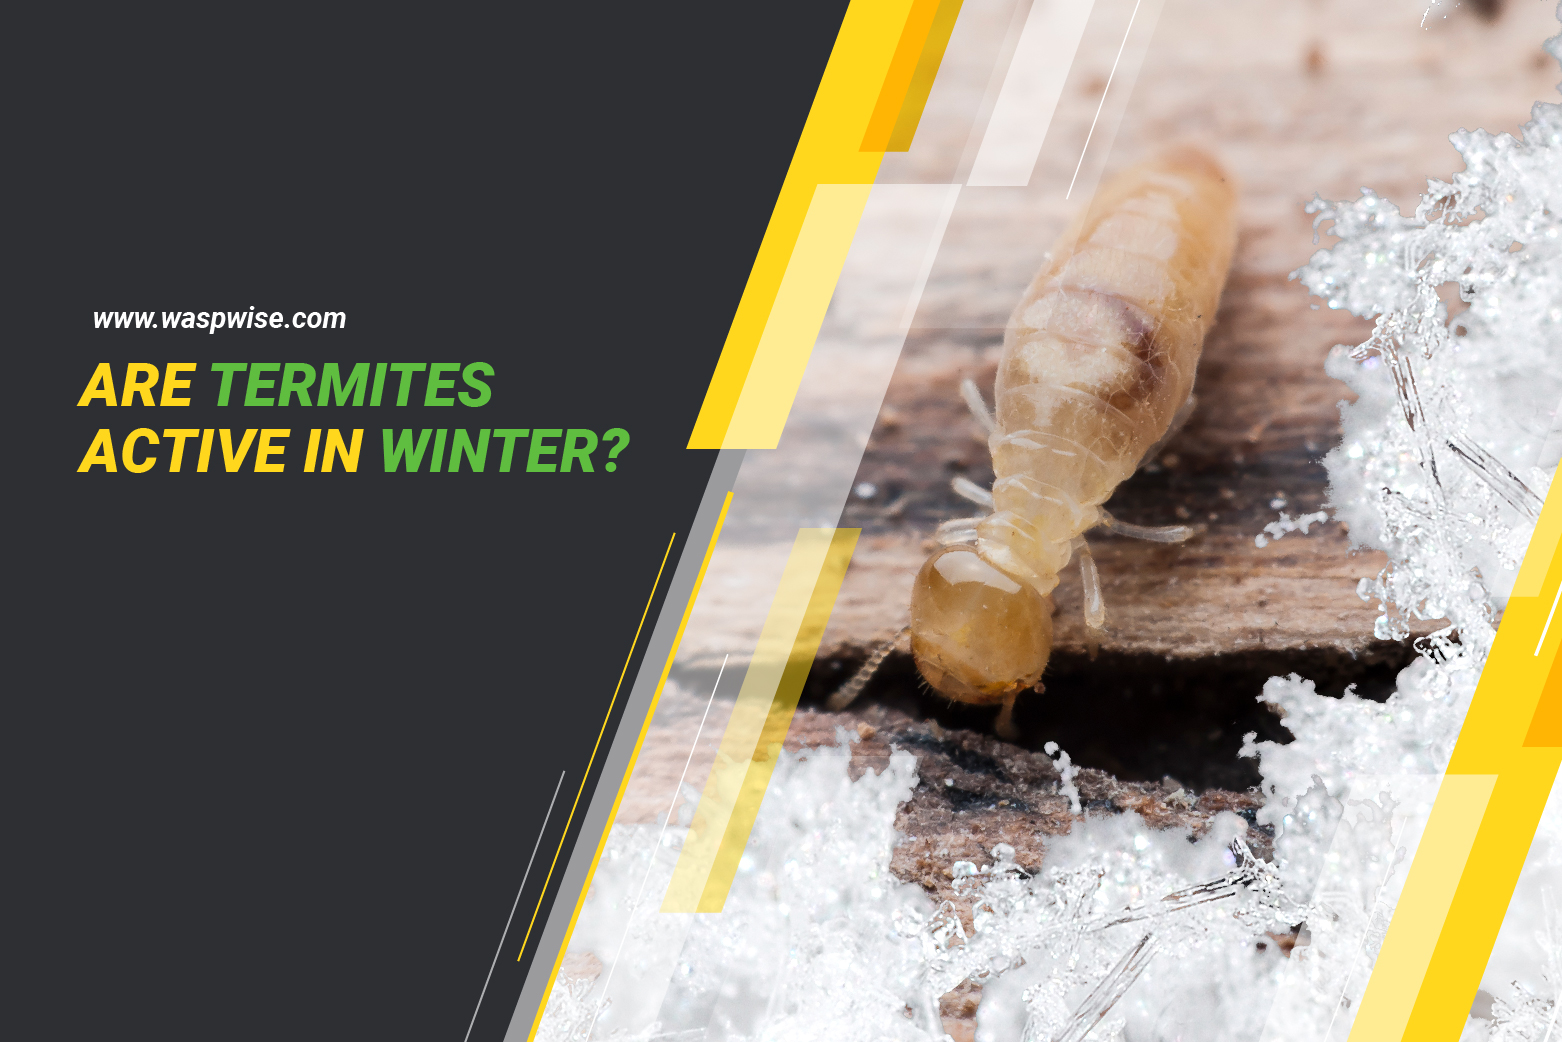 Are termites active in winter